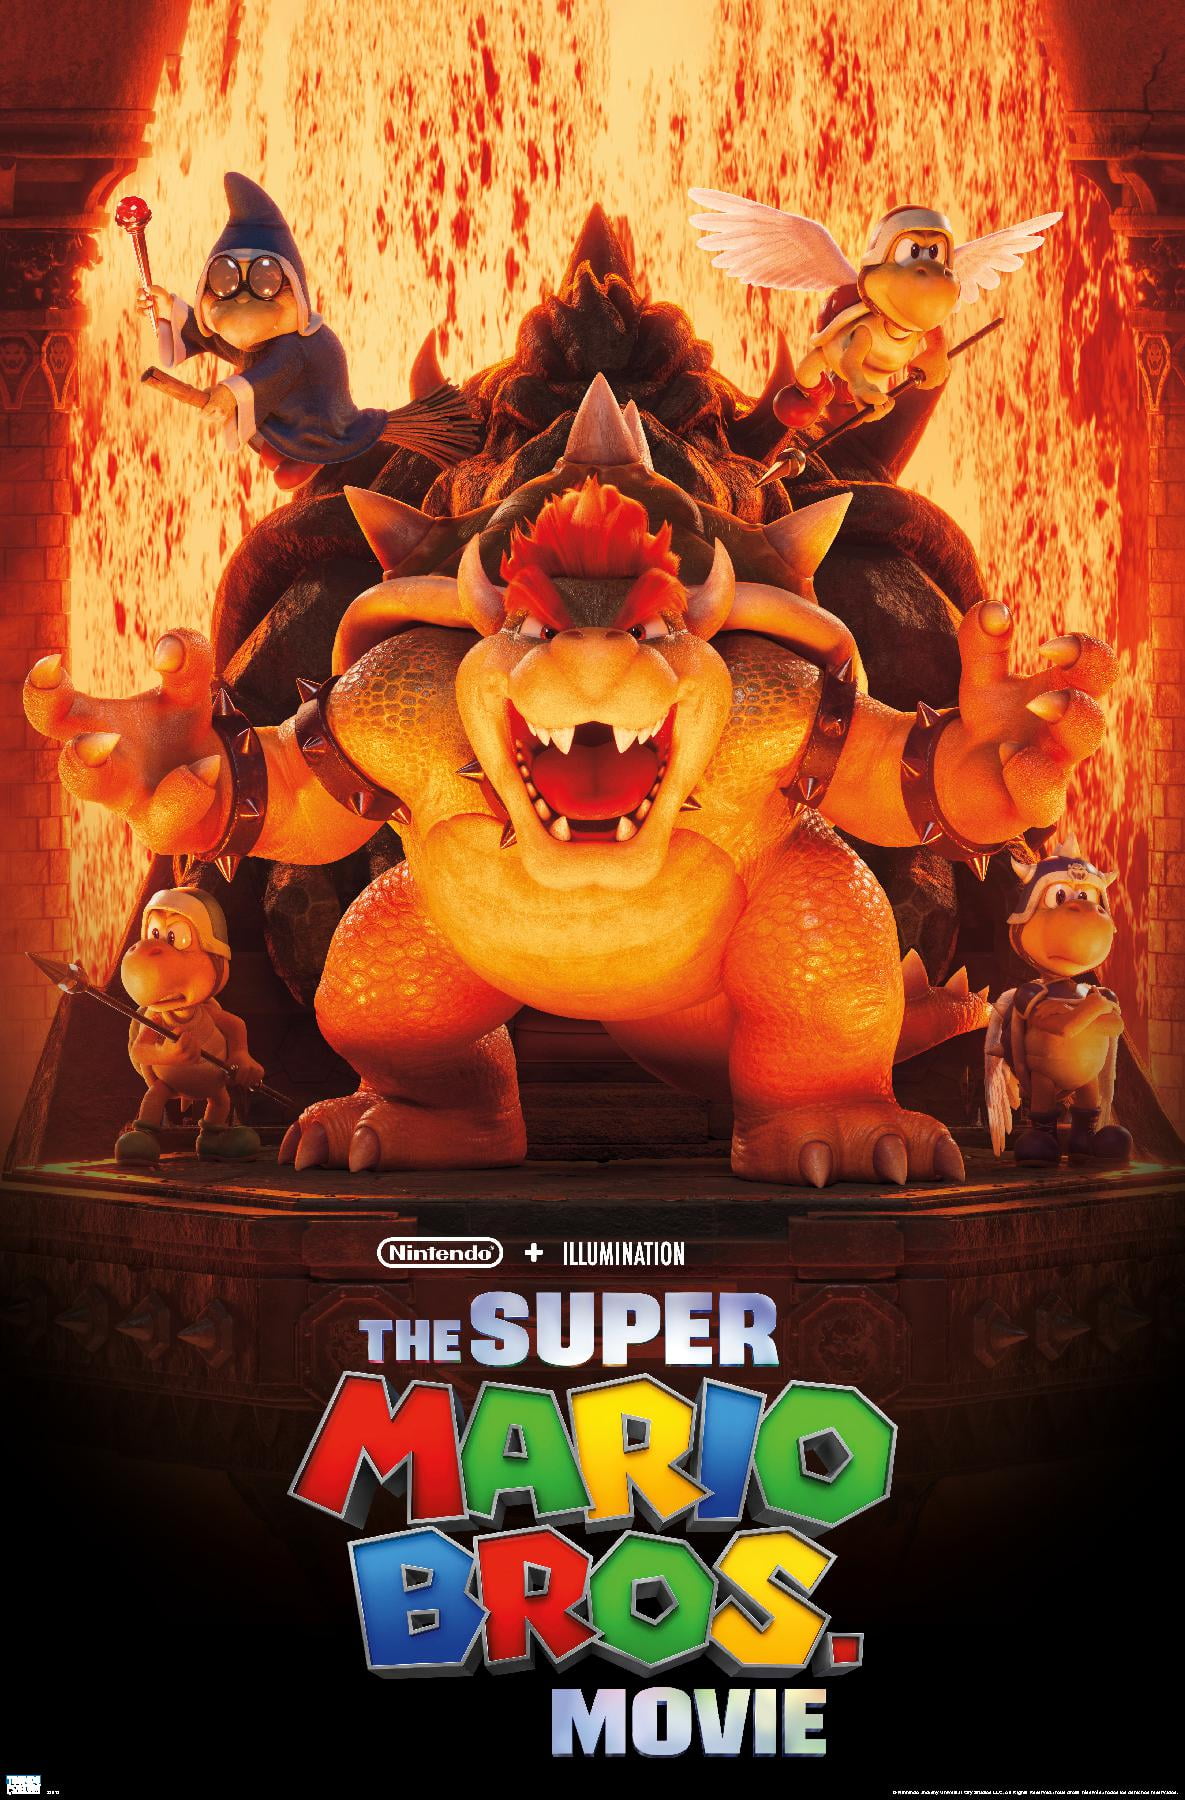 The Super Mario Bros. Movie - Bowser's World Key Art Wall Poster, 14.725 x  22.375 